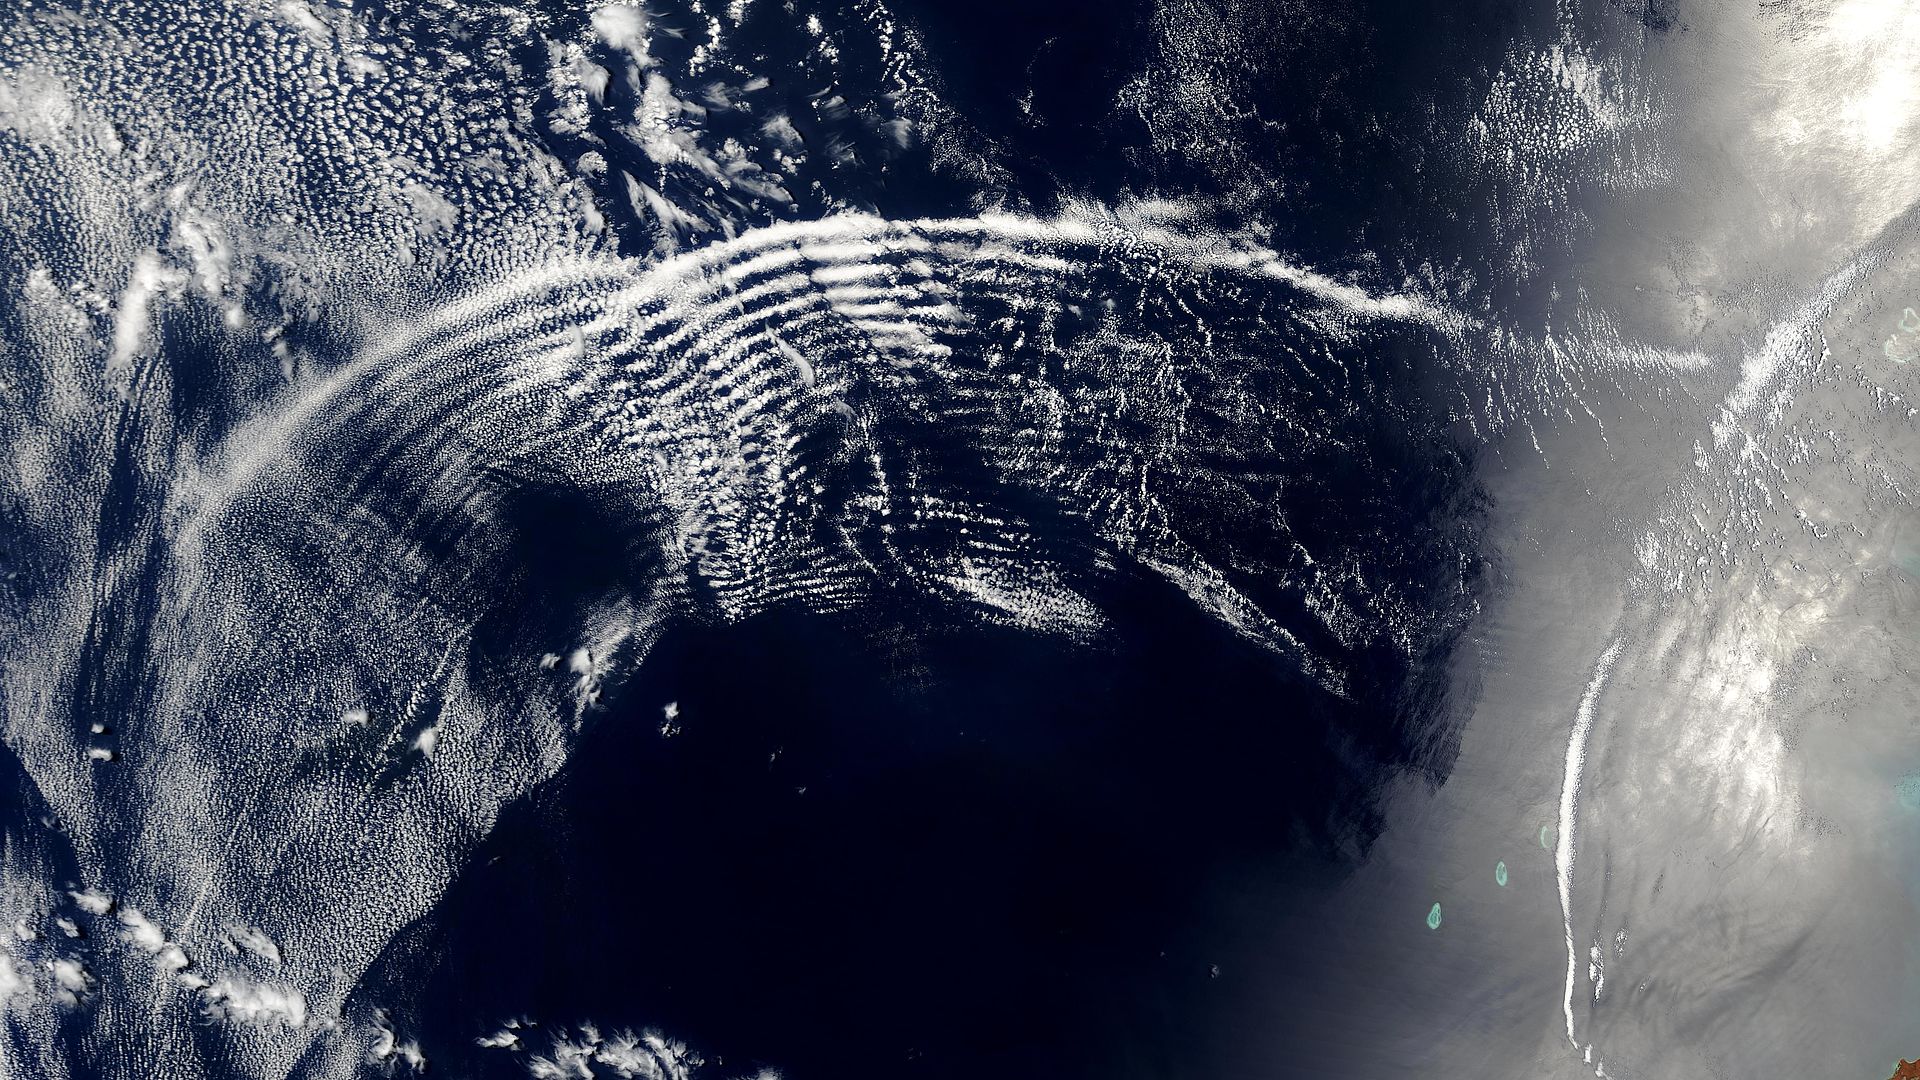 Atmospheric Gravity Waves over the Indian Ocean. Image credit: J. Descloitres, MODIS, Rapid Response Team, NASA/GSFC